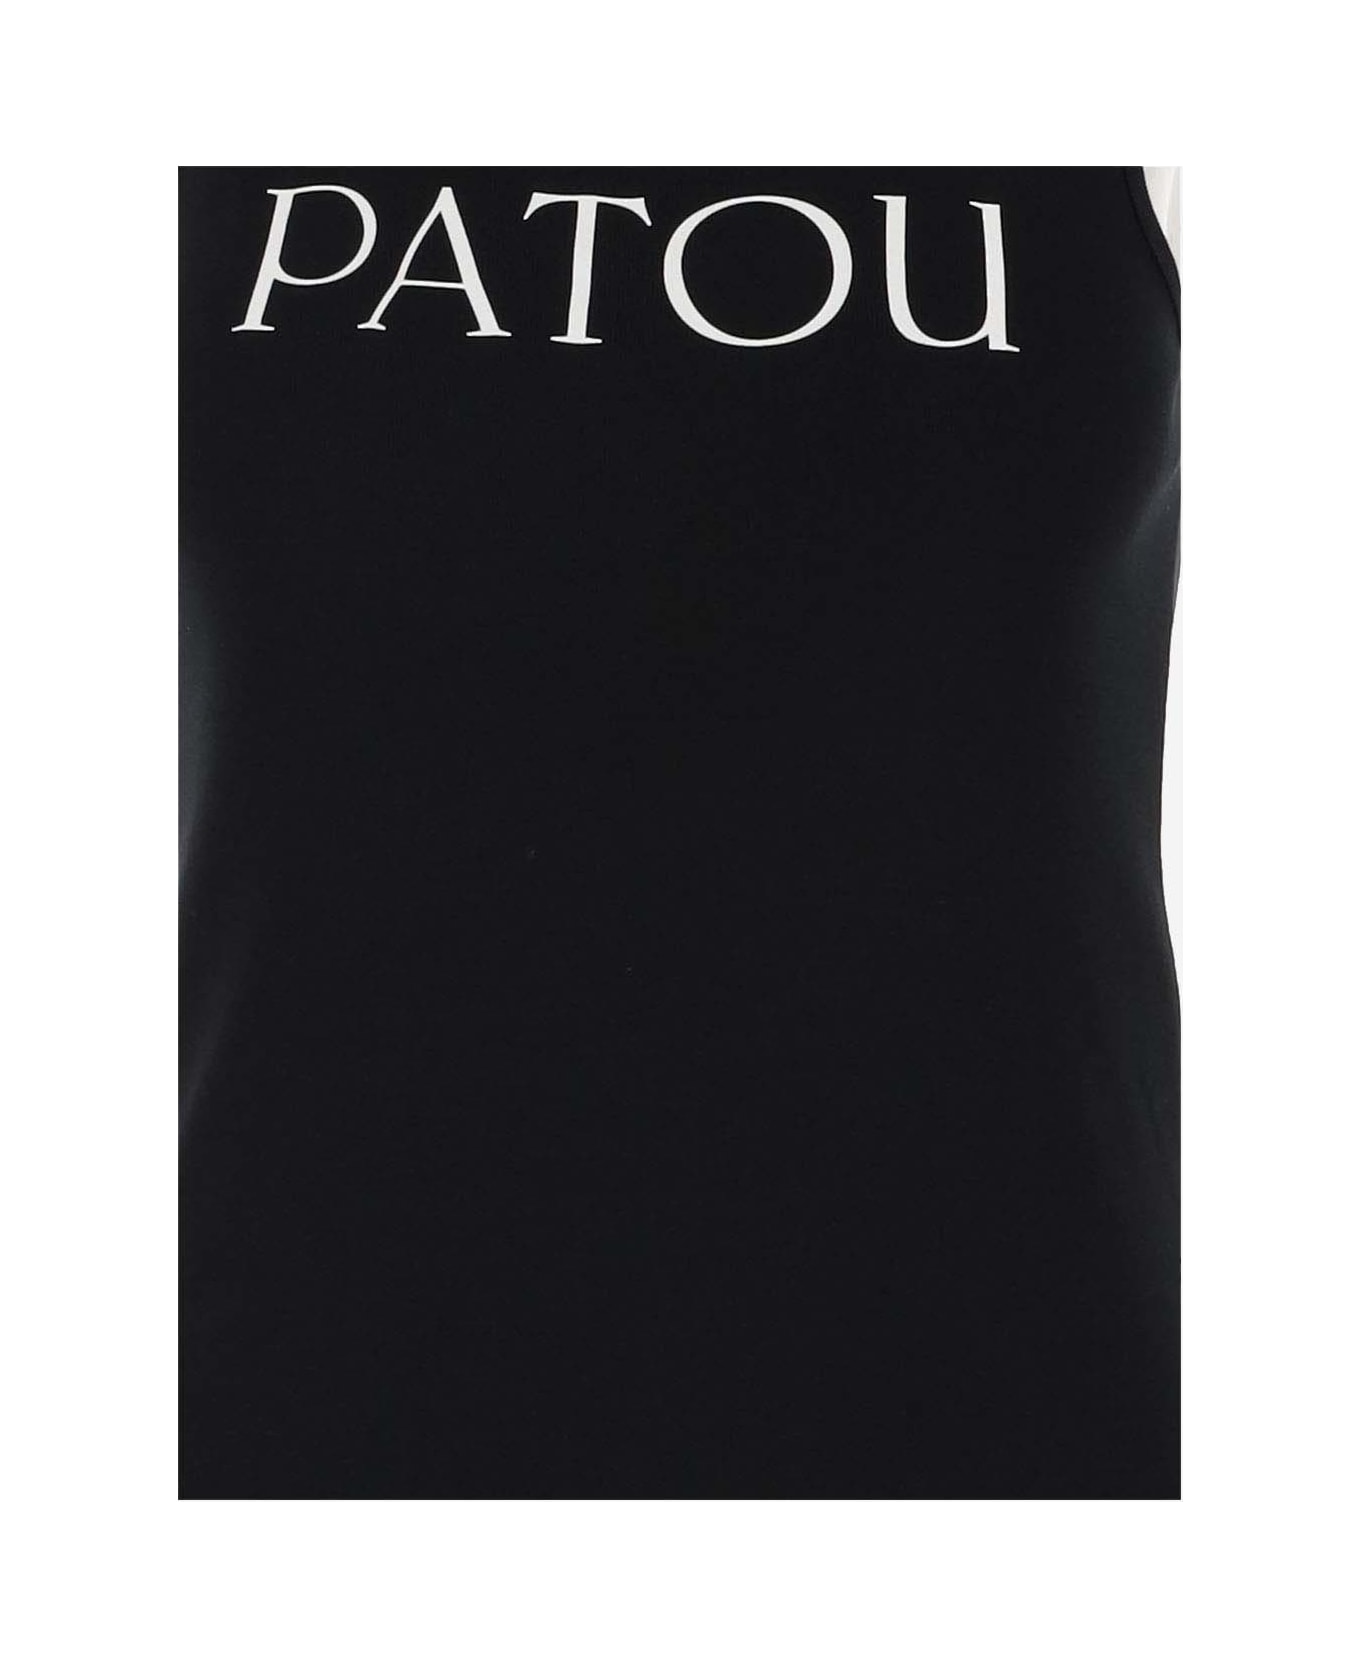 Patou Tank Top With Logo - Black タンクトップ